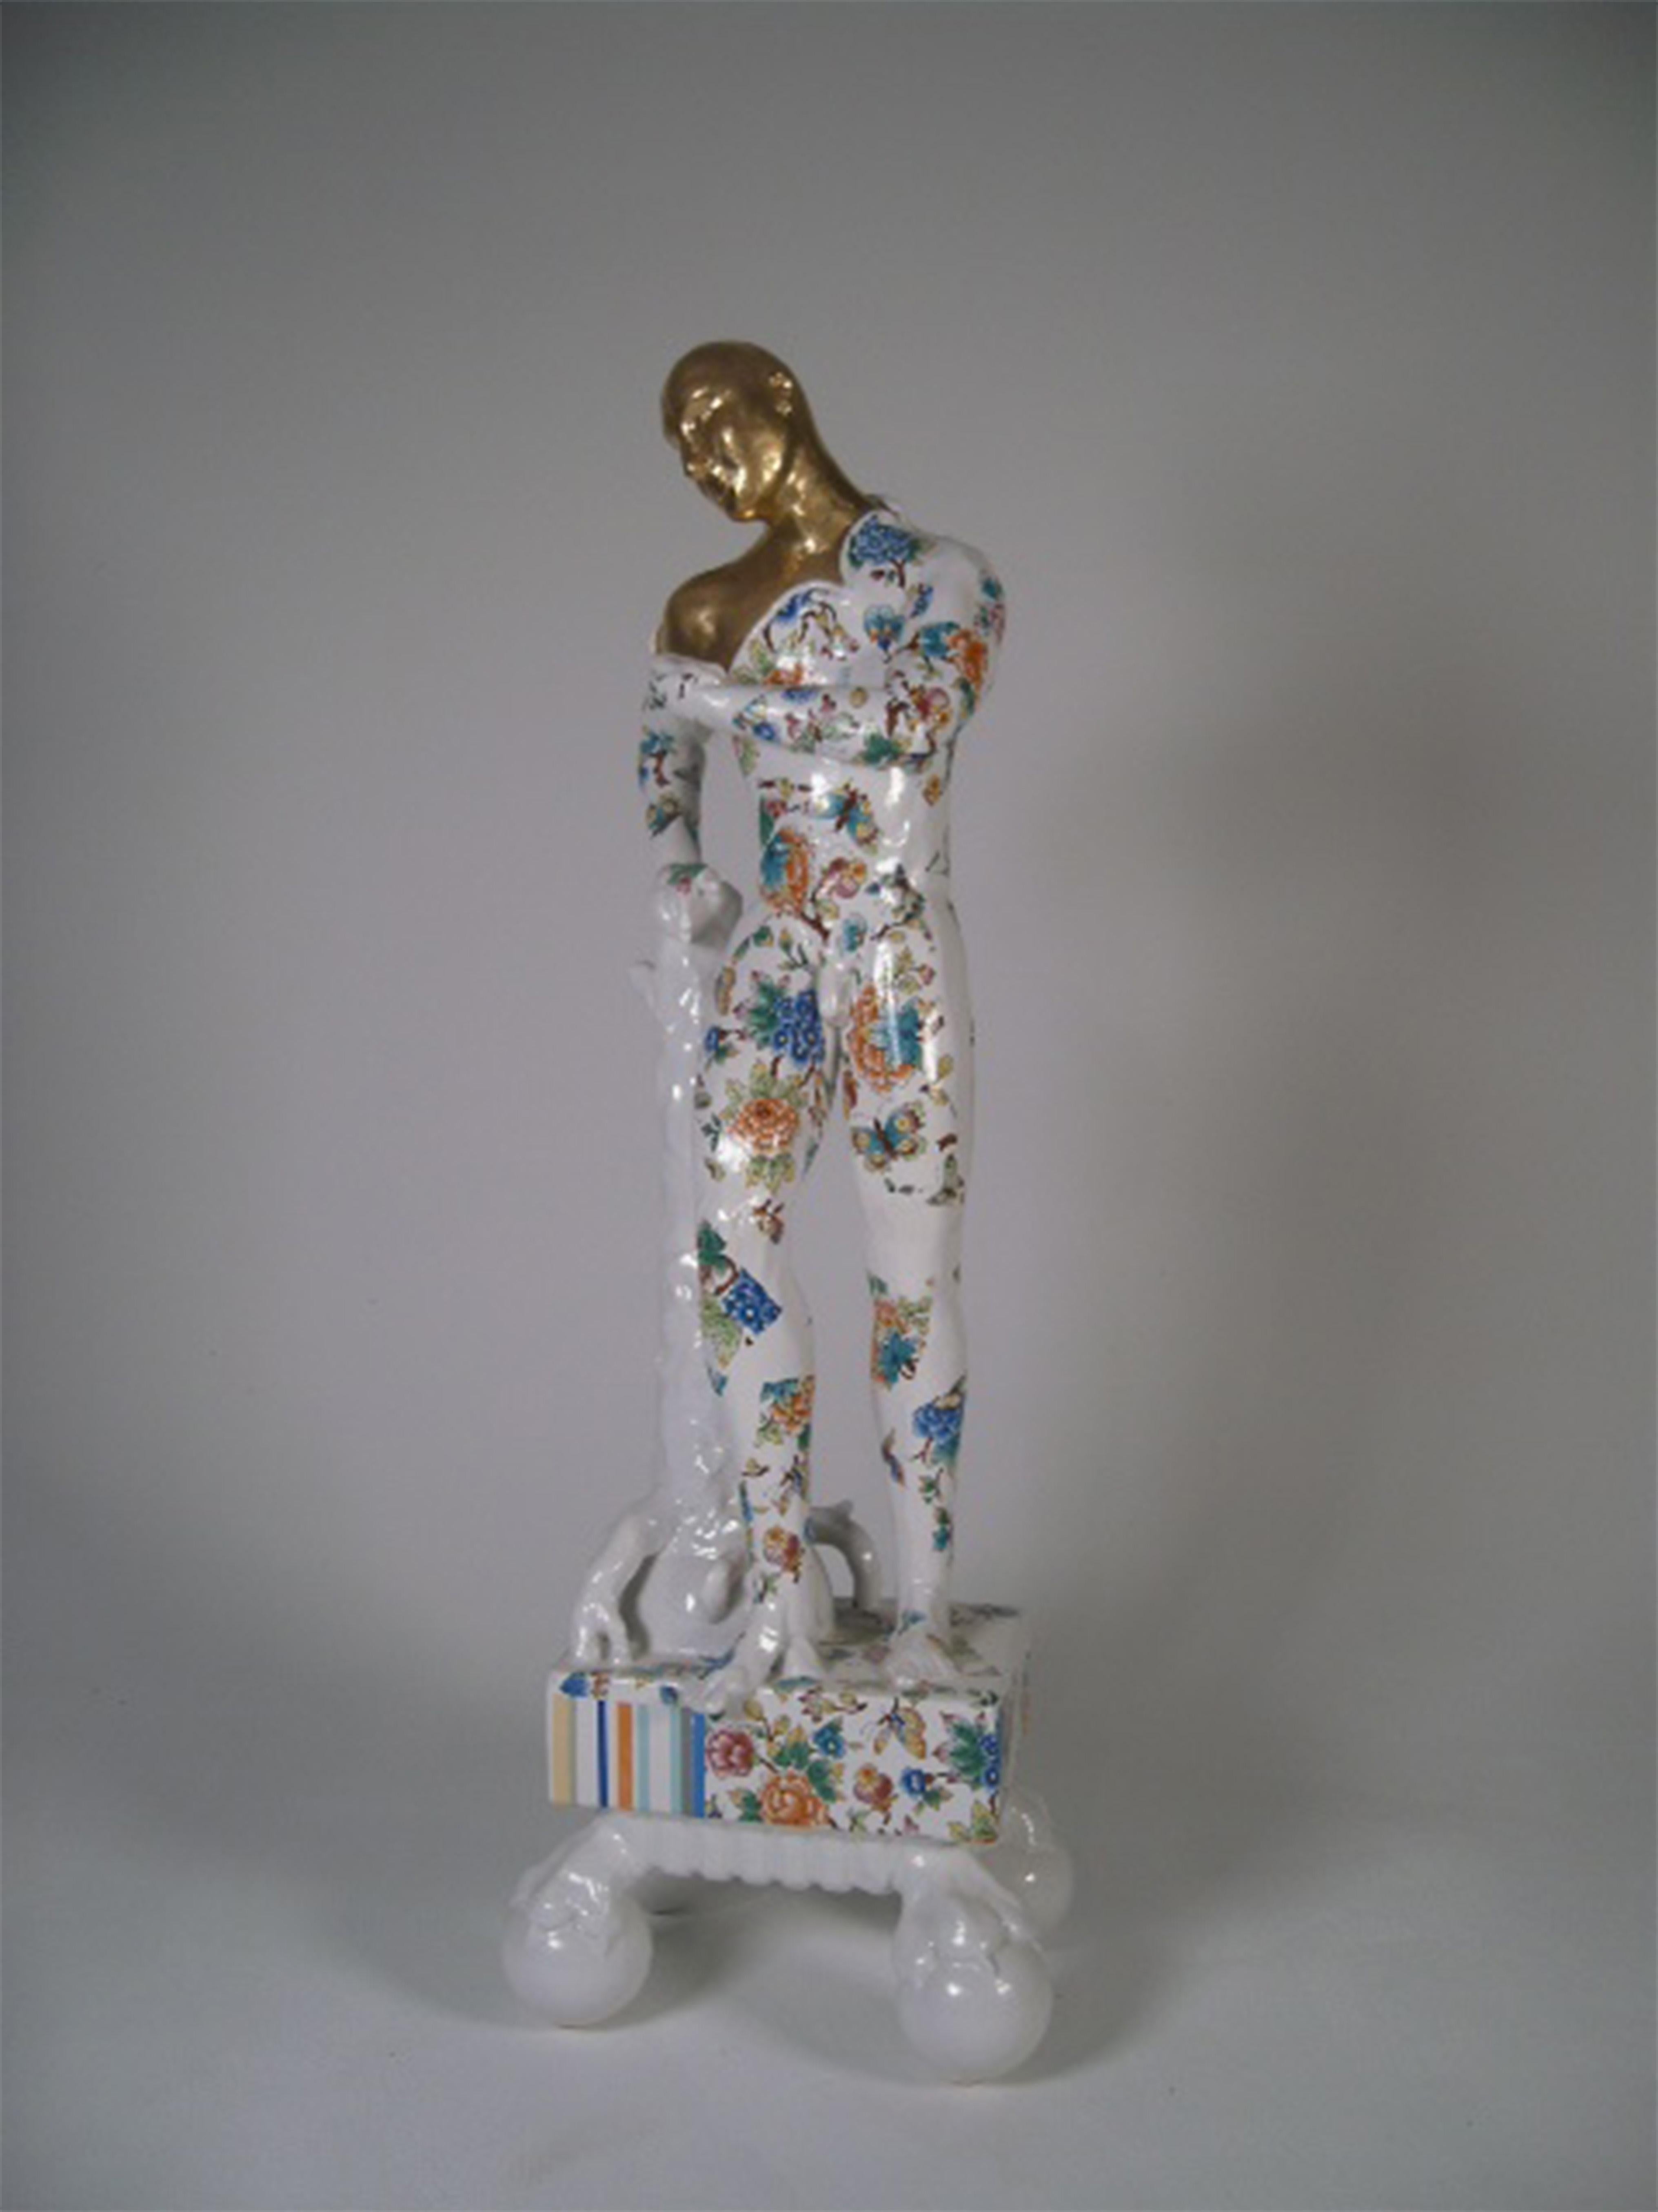 Pierre Williams Figurative Sculpture - Standing Male Nude on Clawed Plinth - contemporary ceramic sculpture